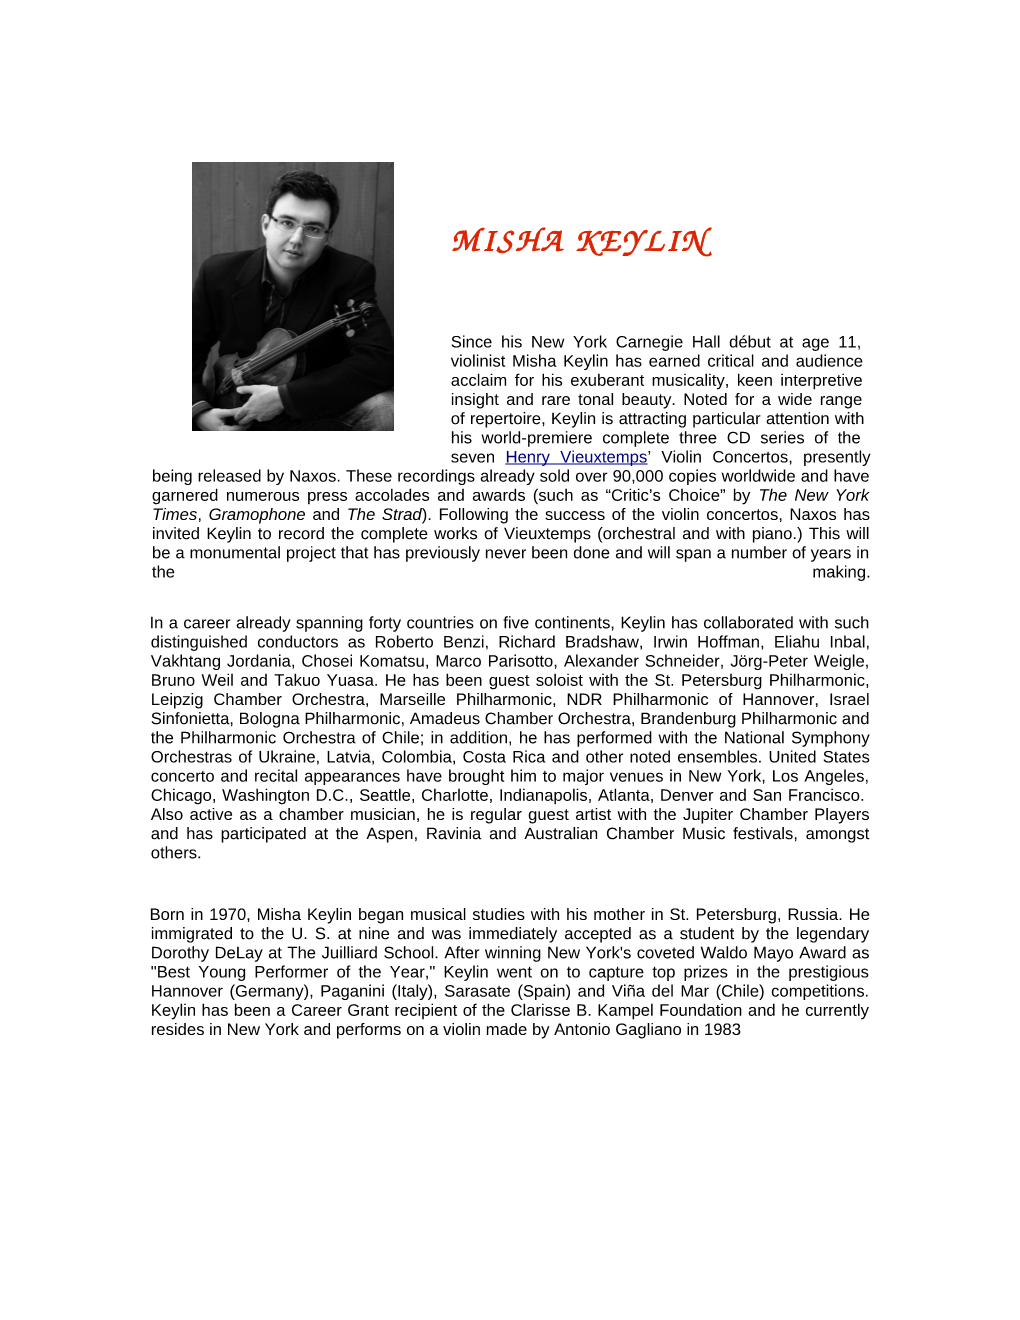 Misha Keylin (Violin)